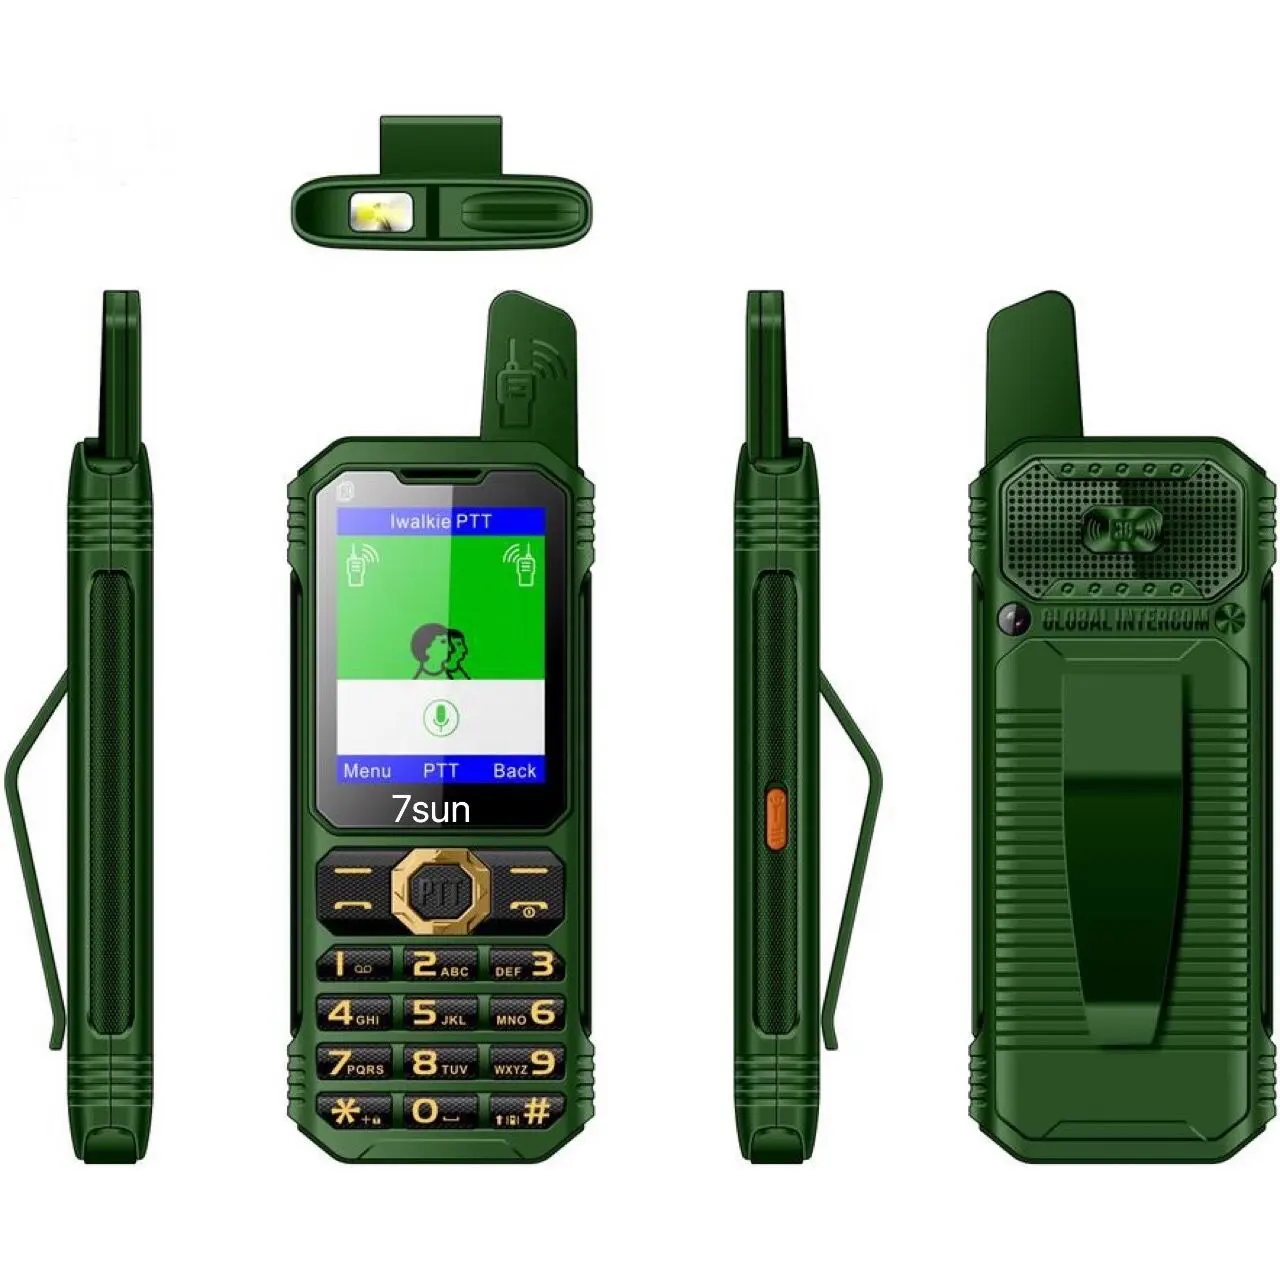 Telefoni cellulari da gioco Venezuela W19PLUS